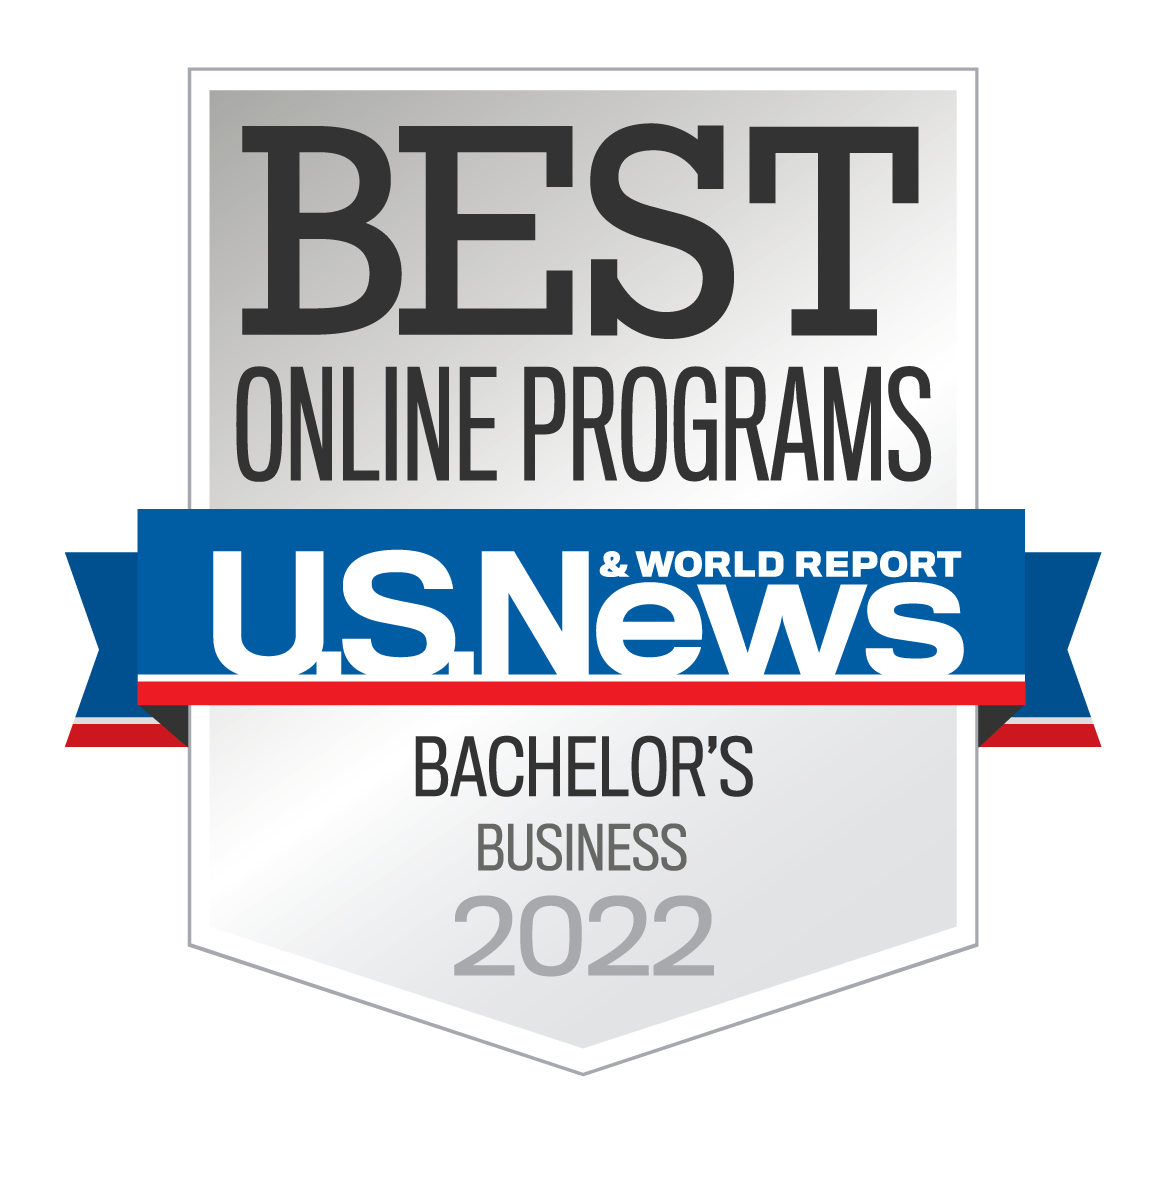 Best Online Programs Bachelors Business 2022